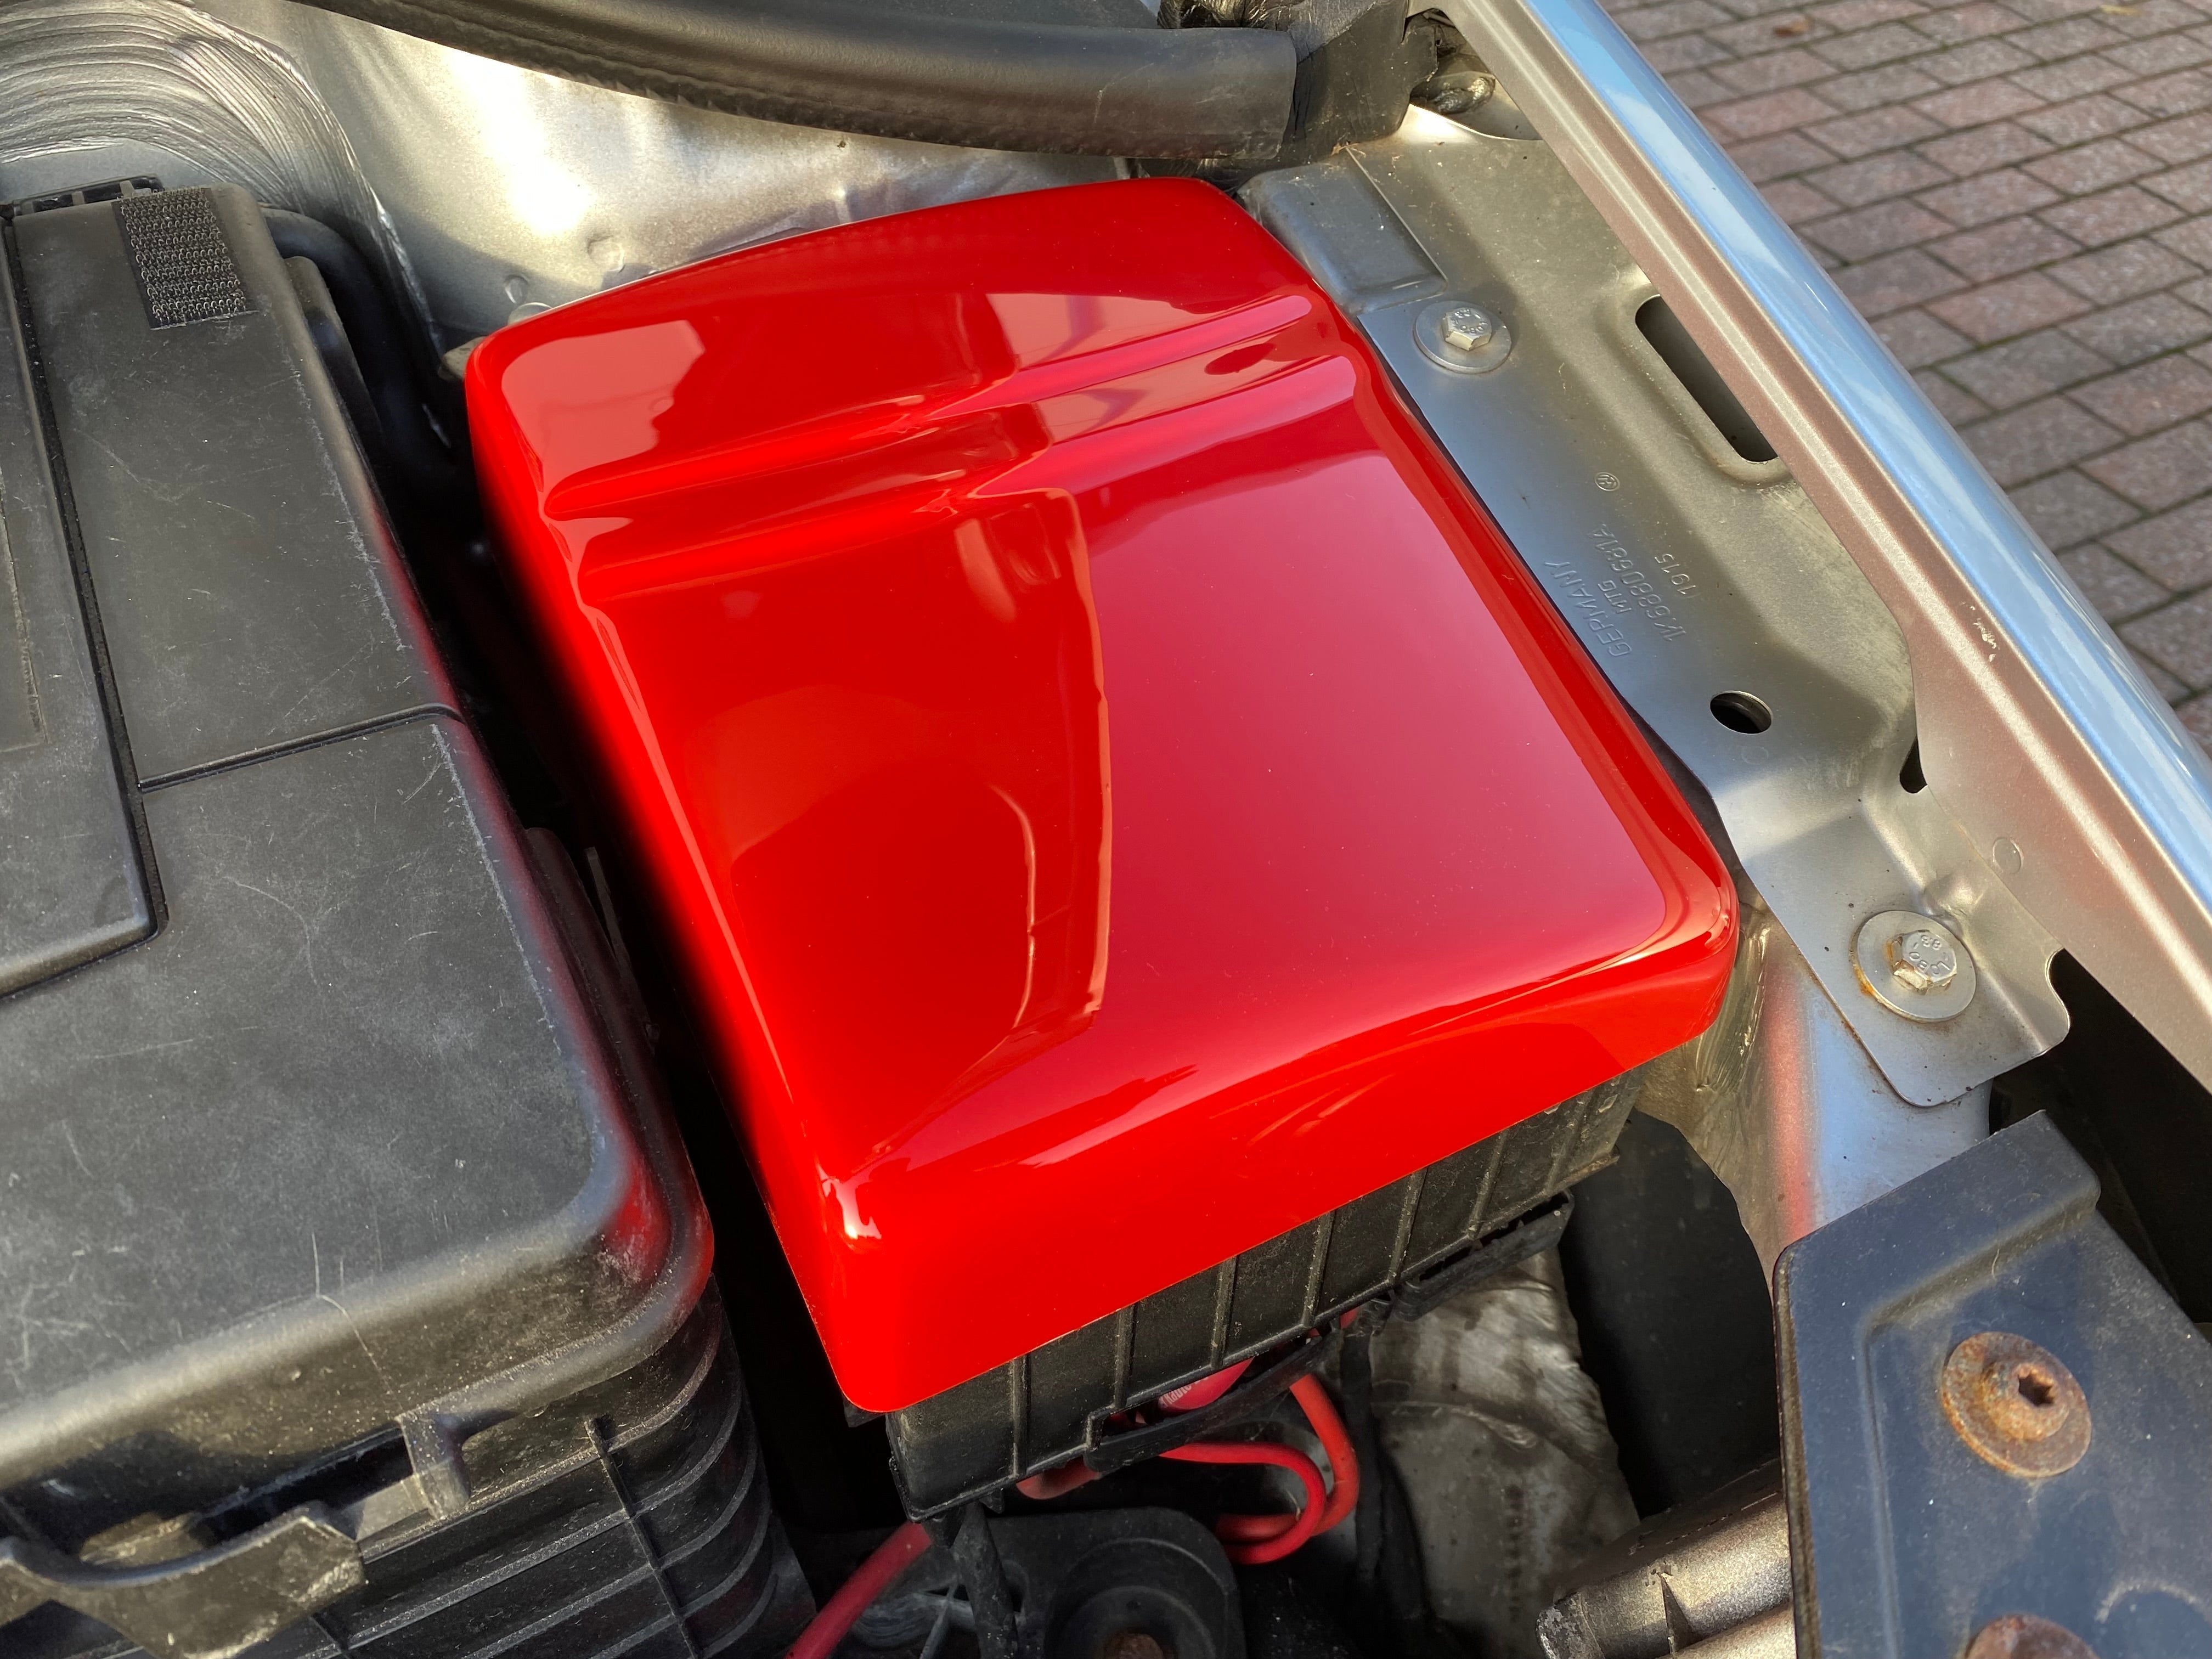 Proform Fuse Box Cover - Mk3/4 Volkswagen Caddy (Plastic Finishes)